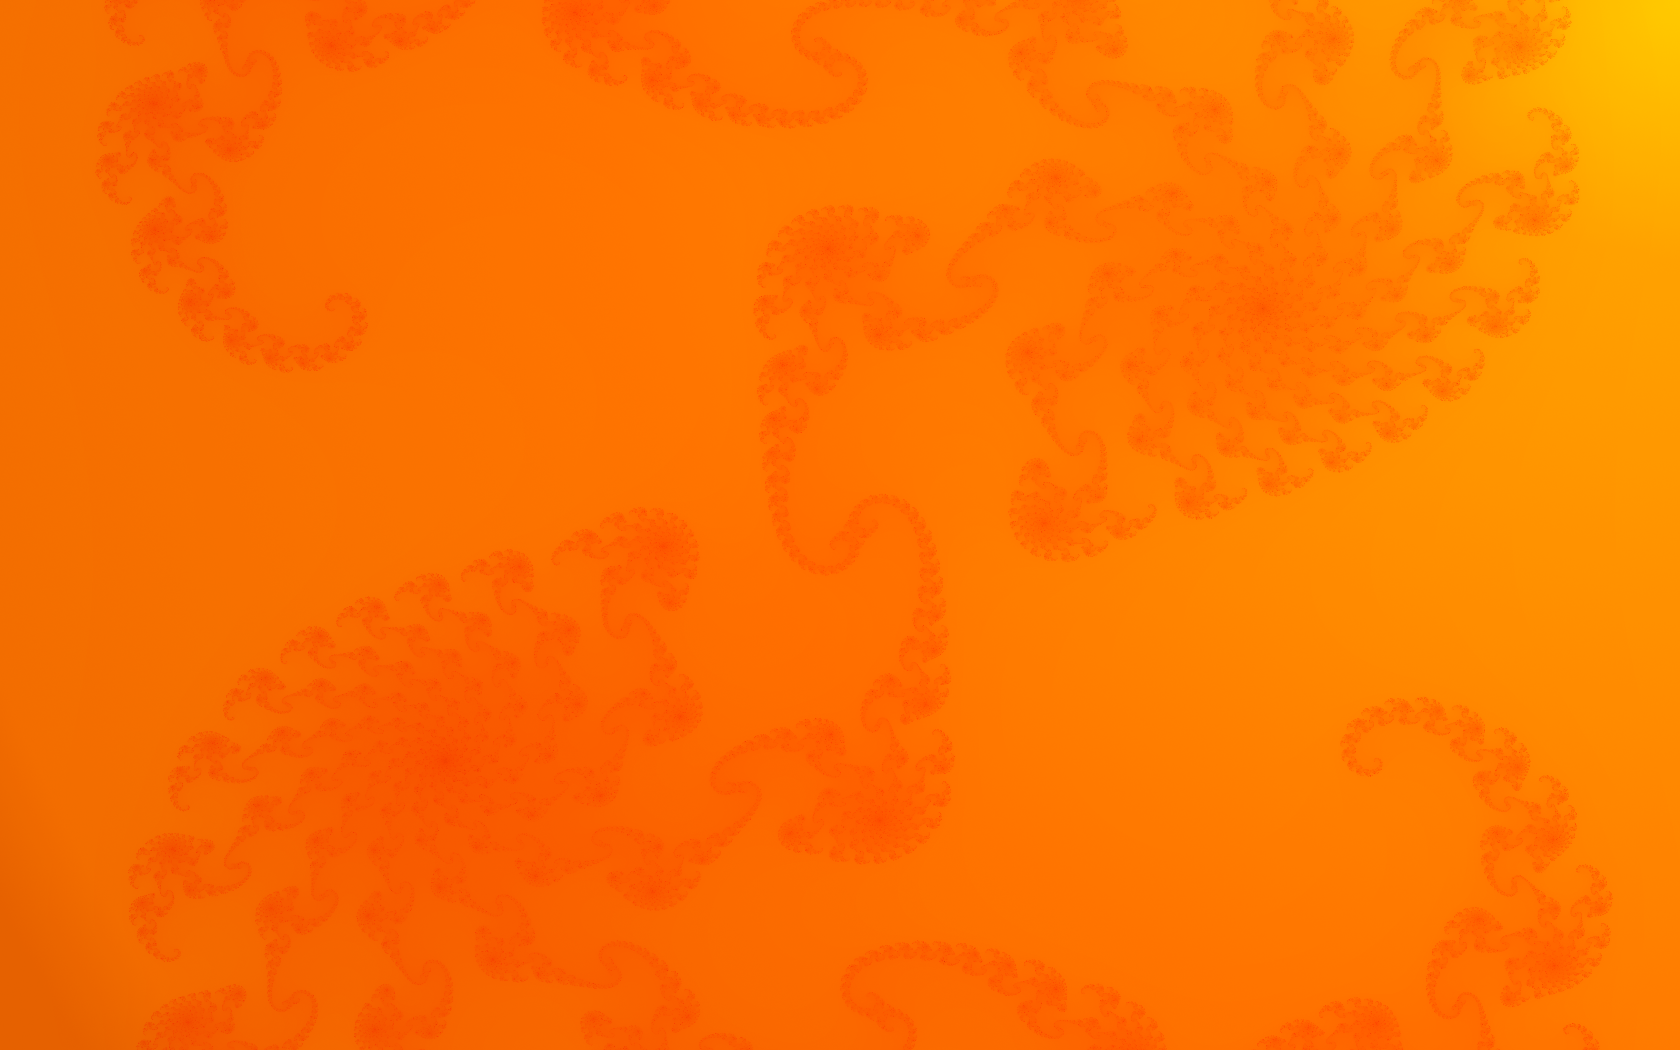  40 HD  Orange  Wallpaper  on WallpaperSafari